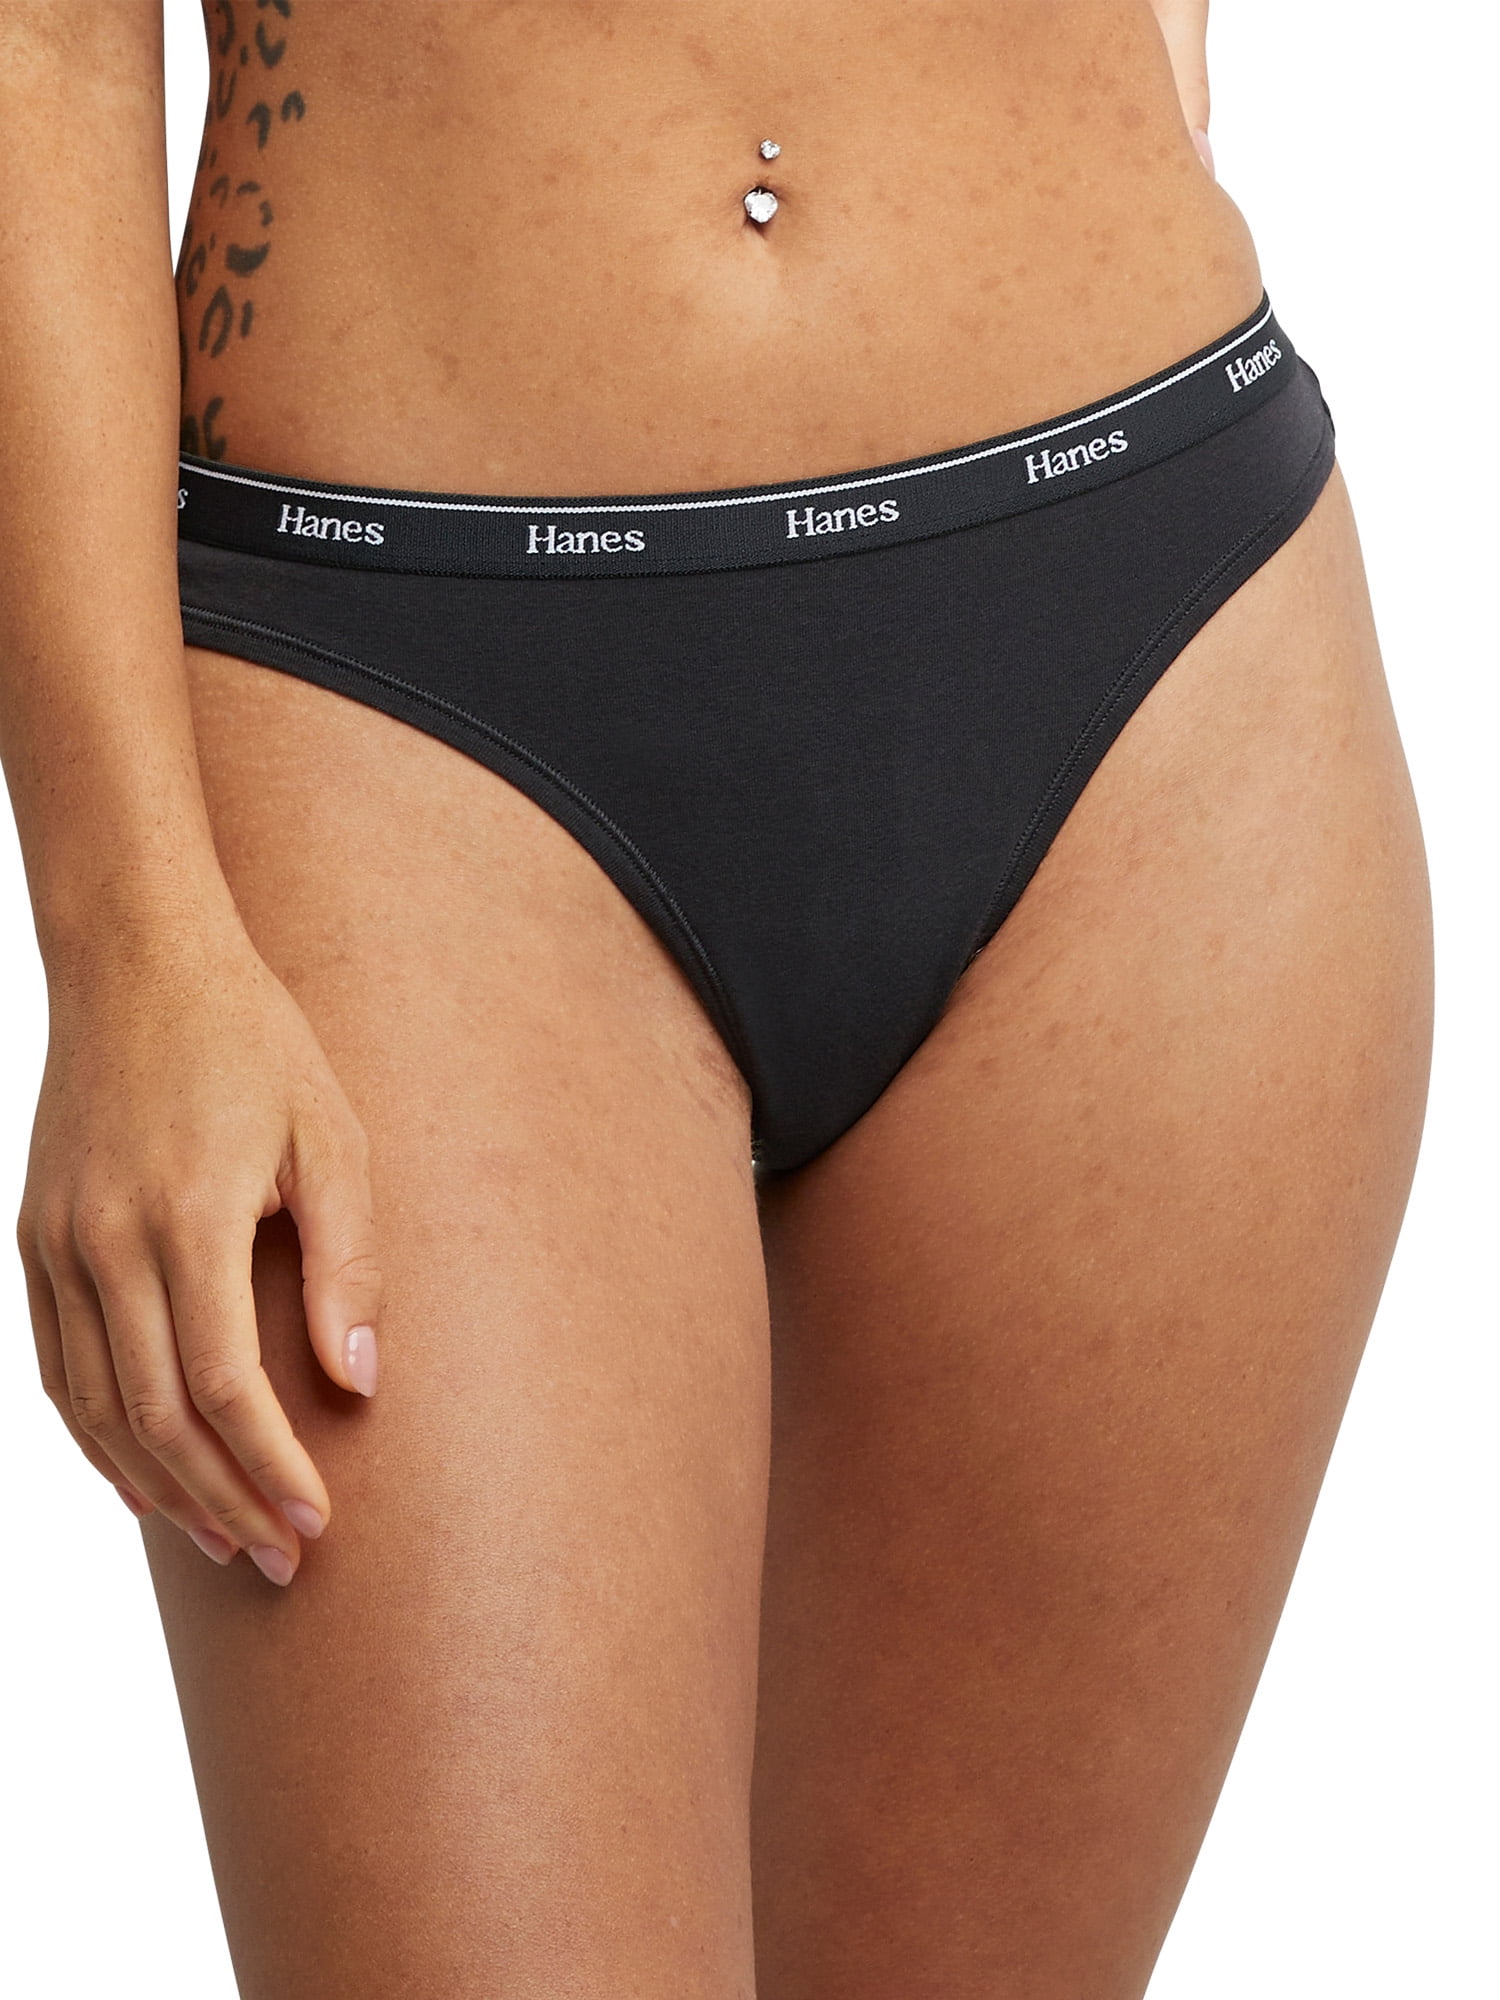 Hanes Originals Women's Thong Underwear, Breathable Cotton